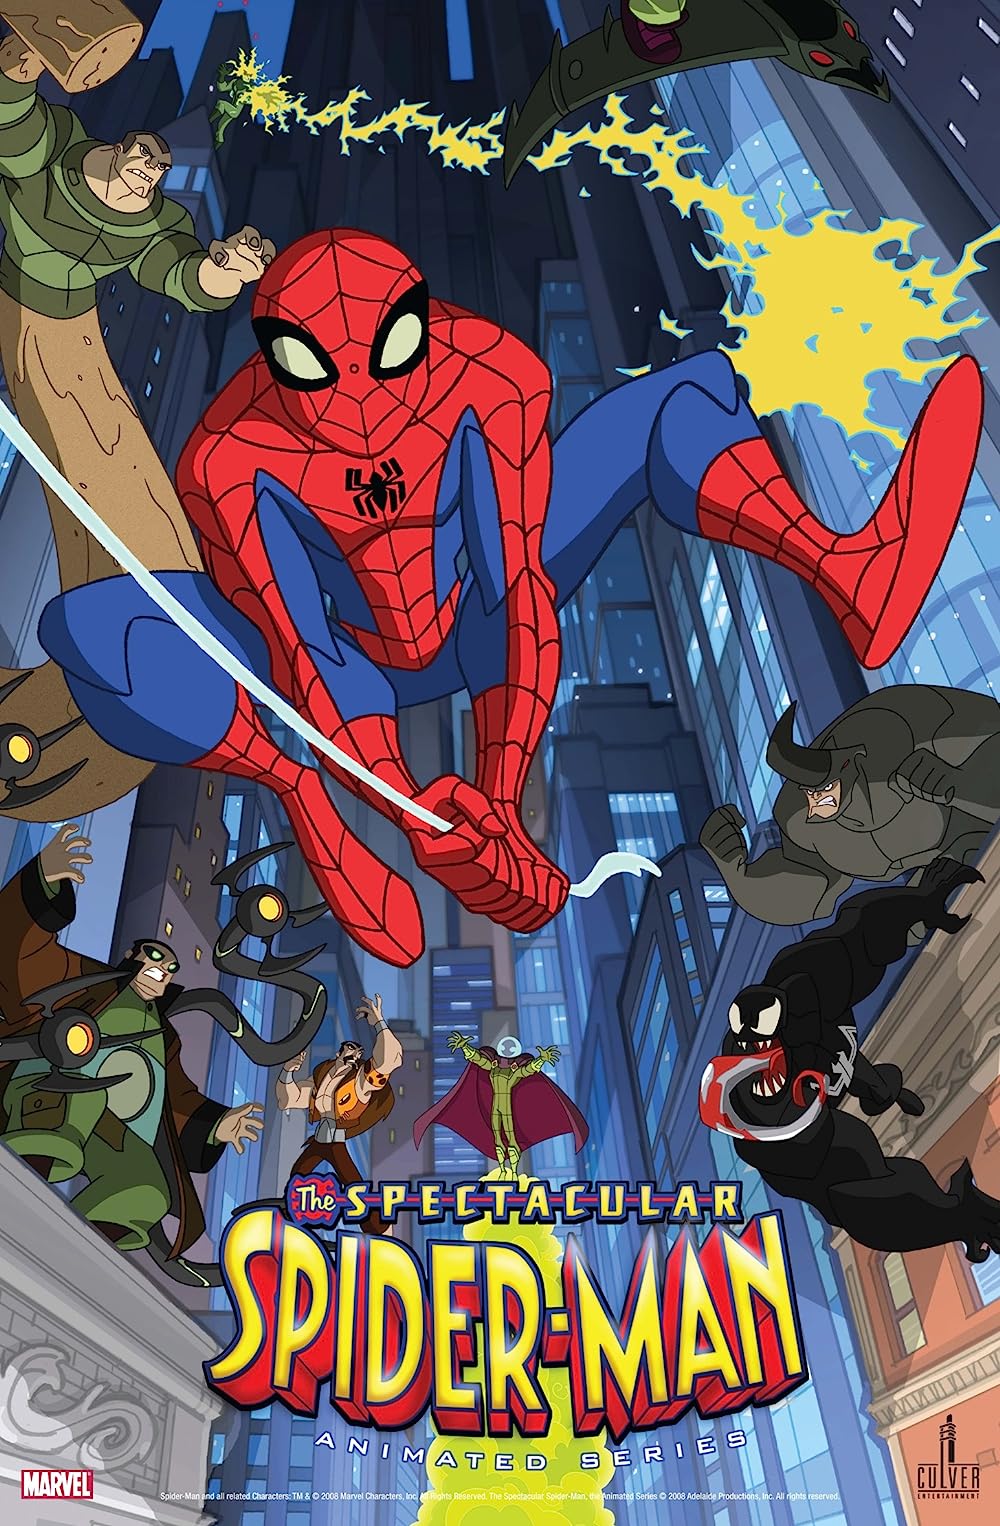 《神奇蜘蛛侠 The Spectacular Spider-Man》第1季